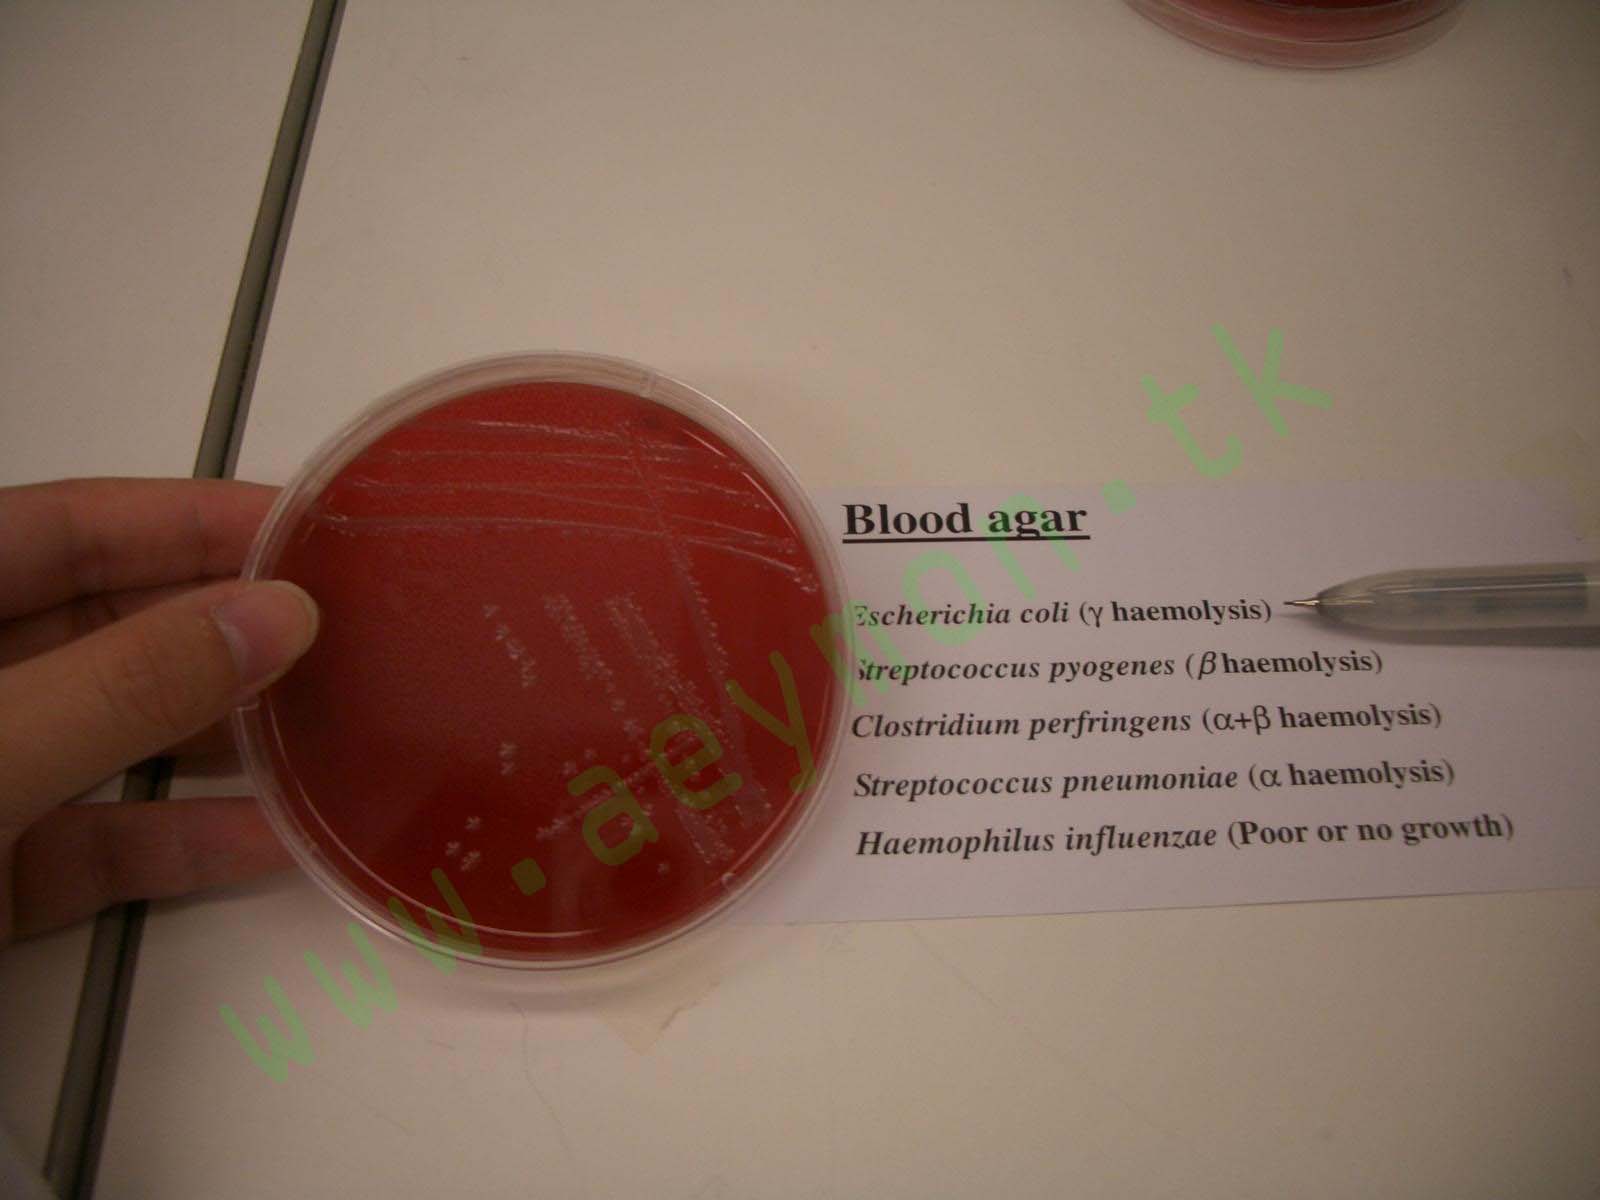 http://1.bp.blogspot.com/_h8swaZWFcE8/TRjq96gtL0I/AAAAAAAABbU/8-5_tyyUvrM/s1600/blood+agar.jpg